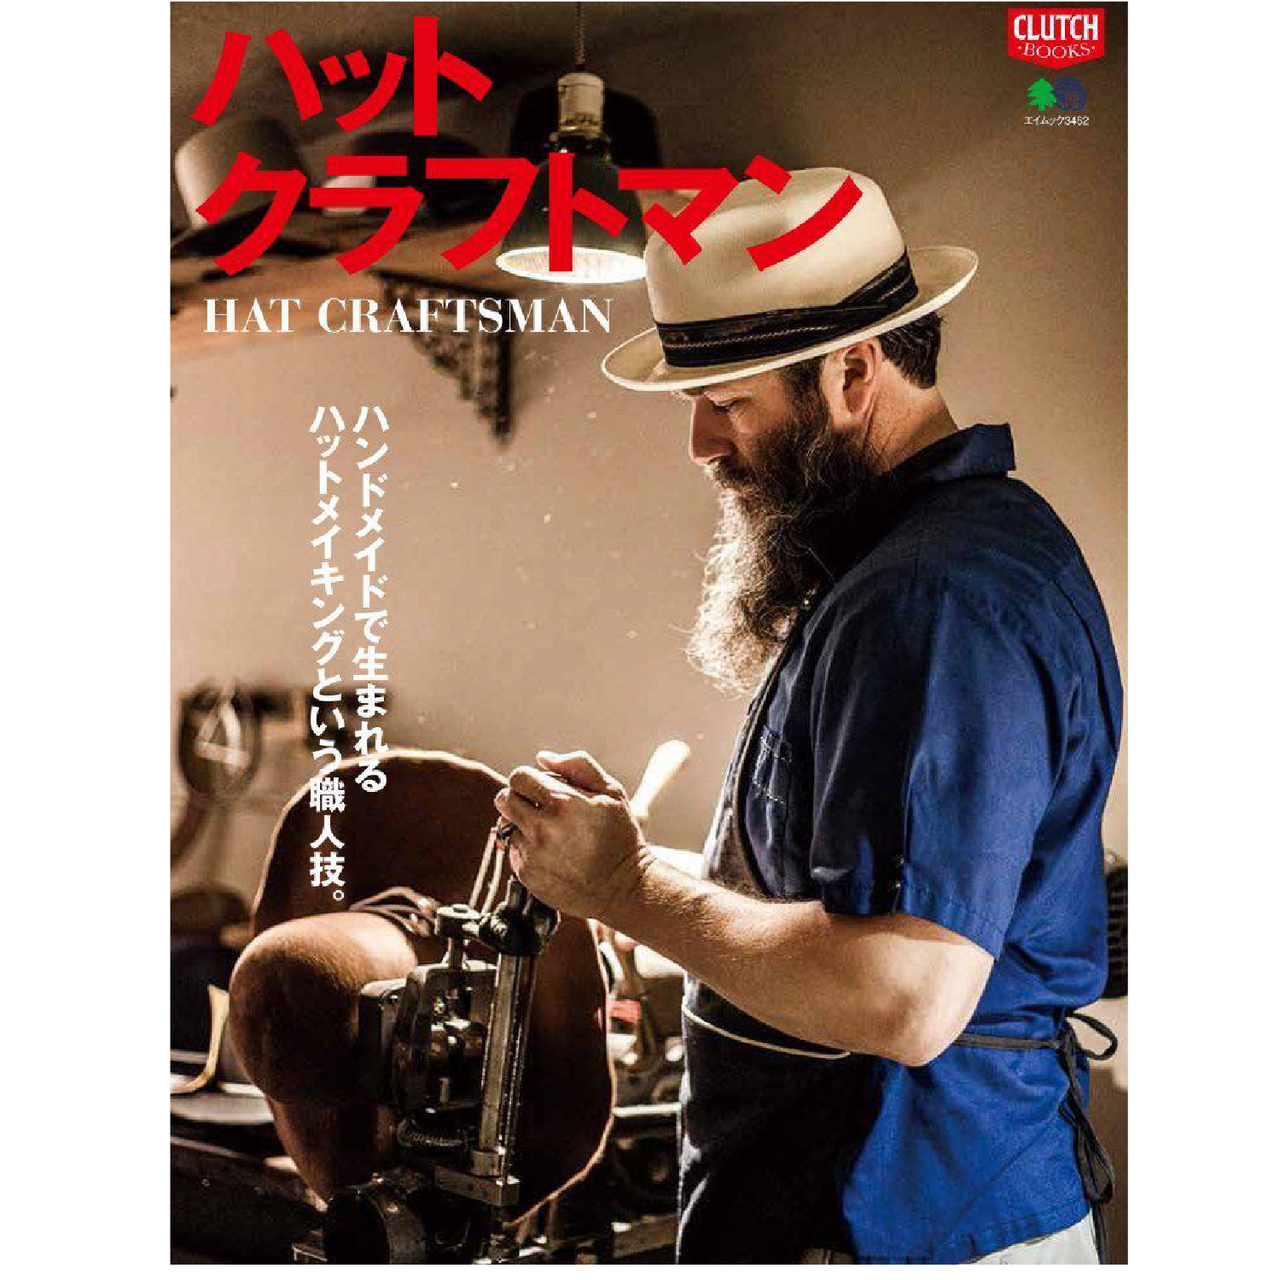 Clutch Books "Hat Craftsman"-Magazine-Clutch Cafe